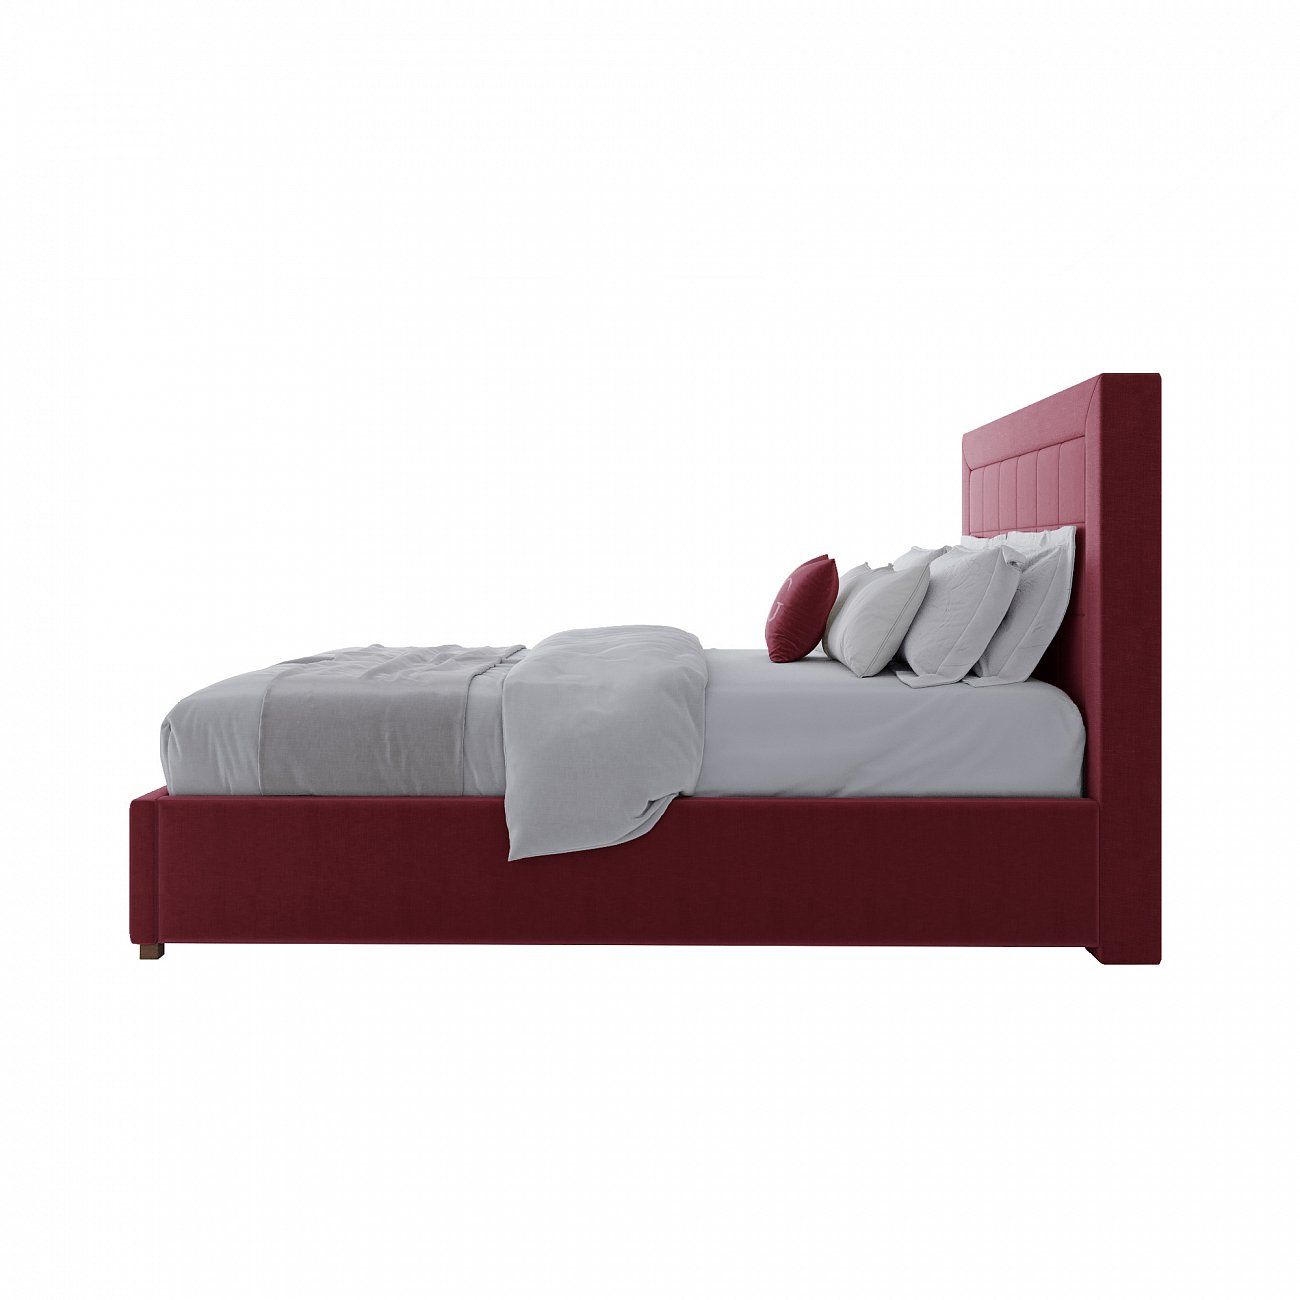 Semi-double teenage bed with a soft headboard 140x200 cm red Elizabeth